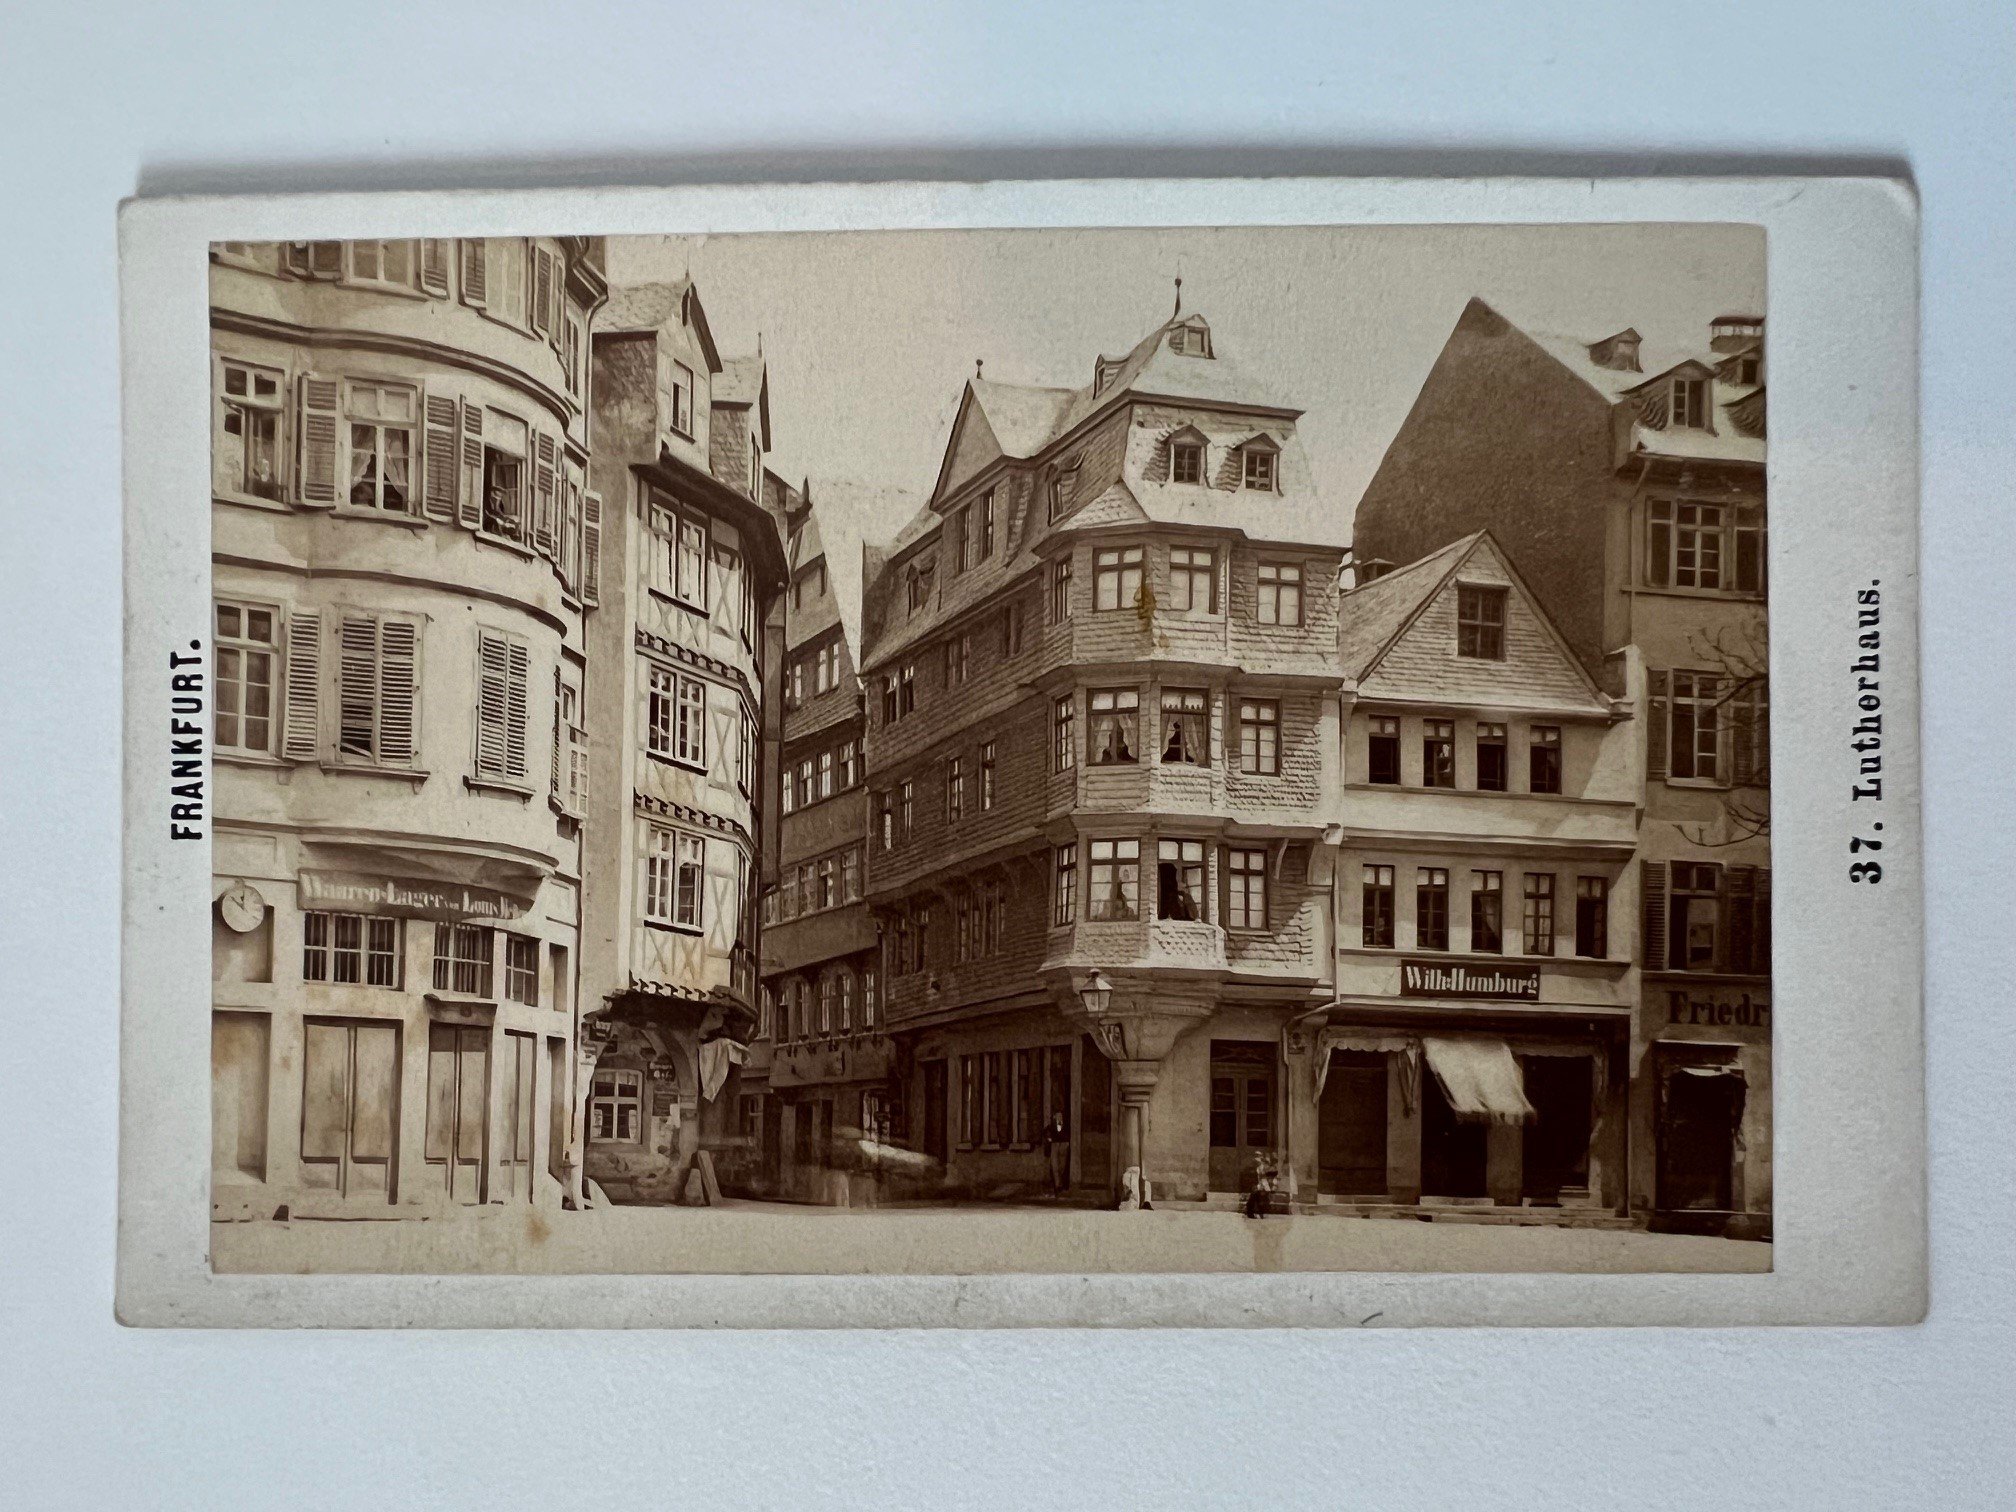 CdV, Frantisek Fridrich, Frankfurt, Nr. 17, Lutherhaus ca. 1875. (Taunus-Rhein-Main - Regionalgeschichtliche Sammlung Dr. Stefan Naas CC BY-NC-SA)